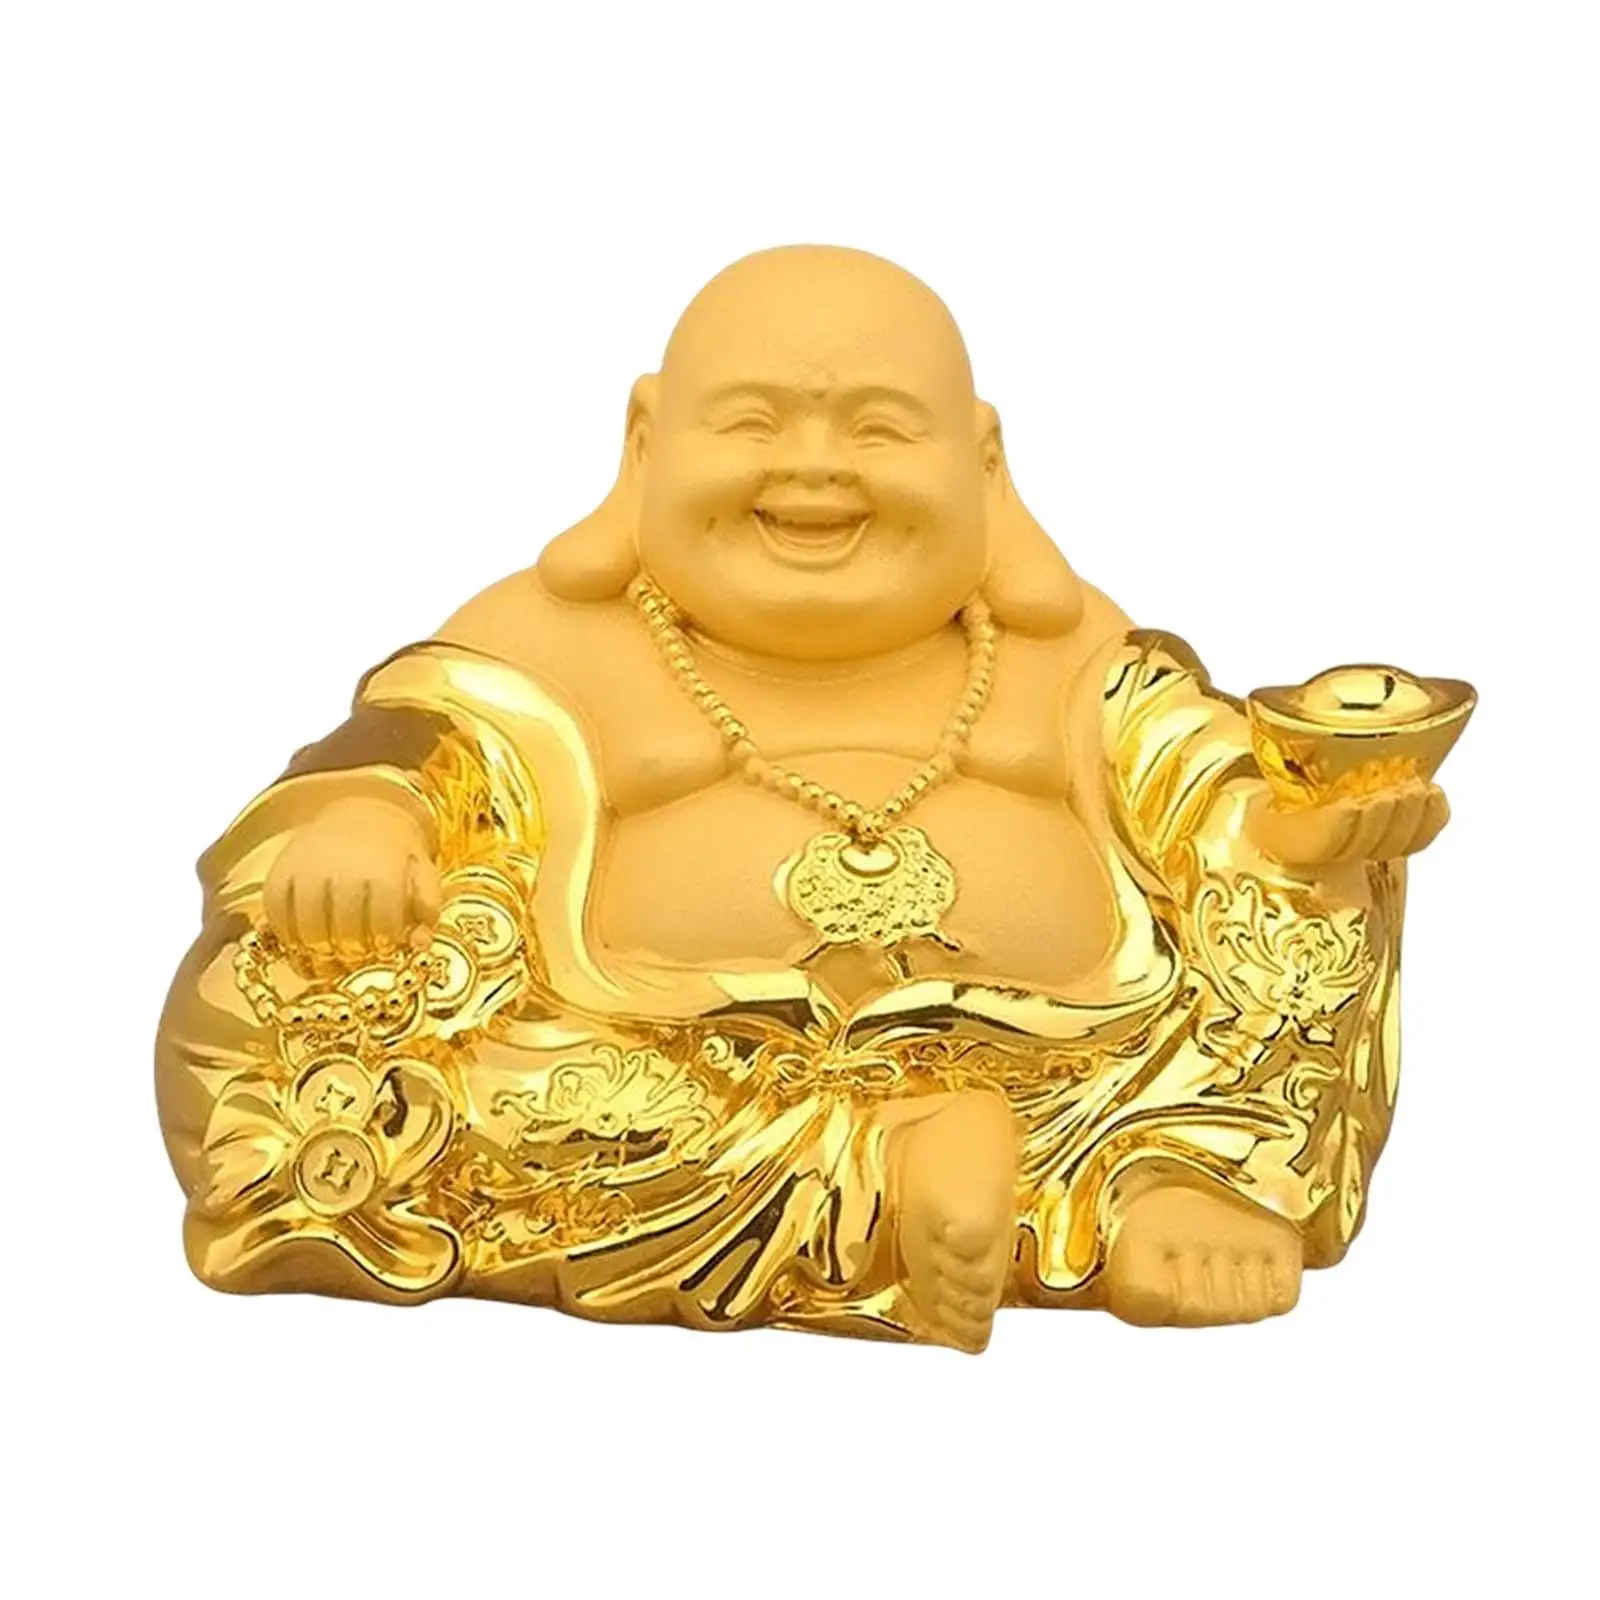 Maitreya Buddha Statues Sculpture Luck Decoration Traditional Figurine for Desktop Office Car Dashboard Home Housewarming Gifts